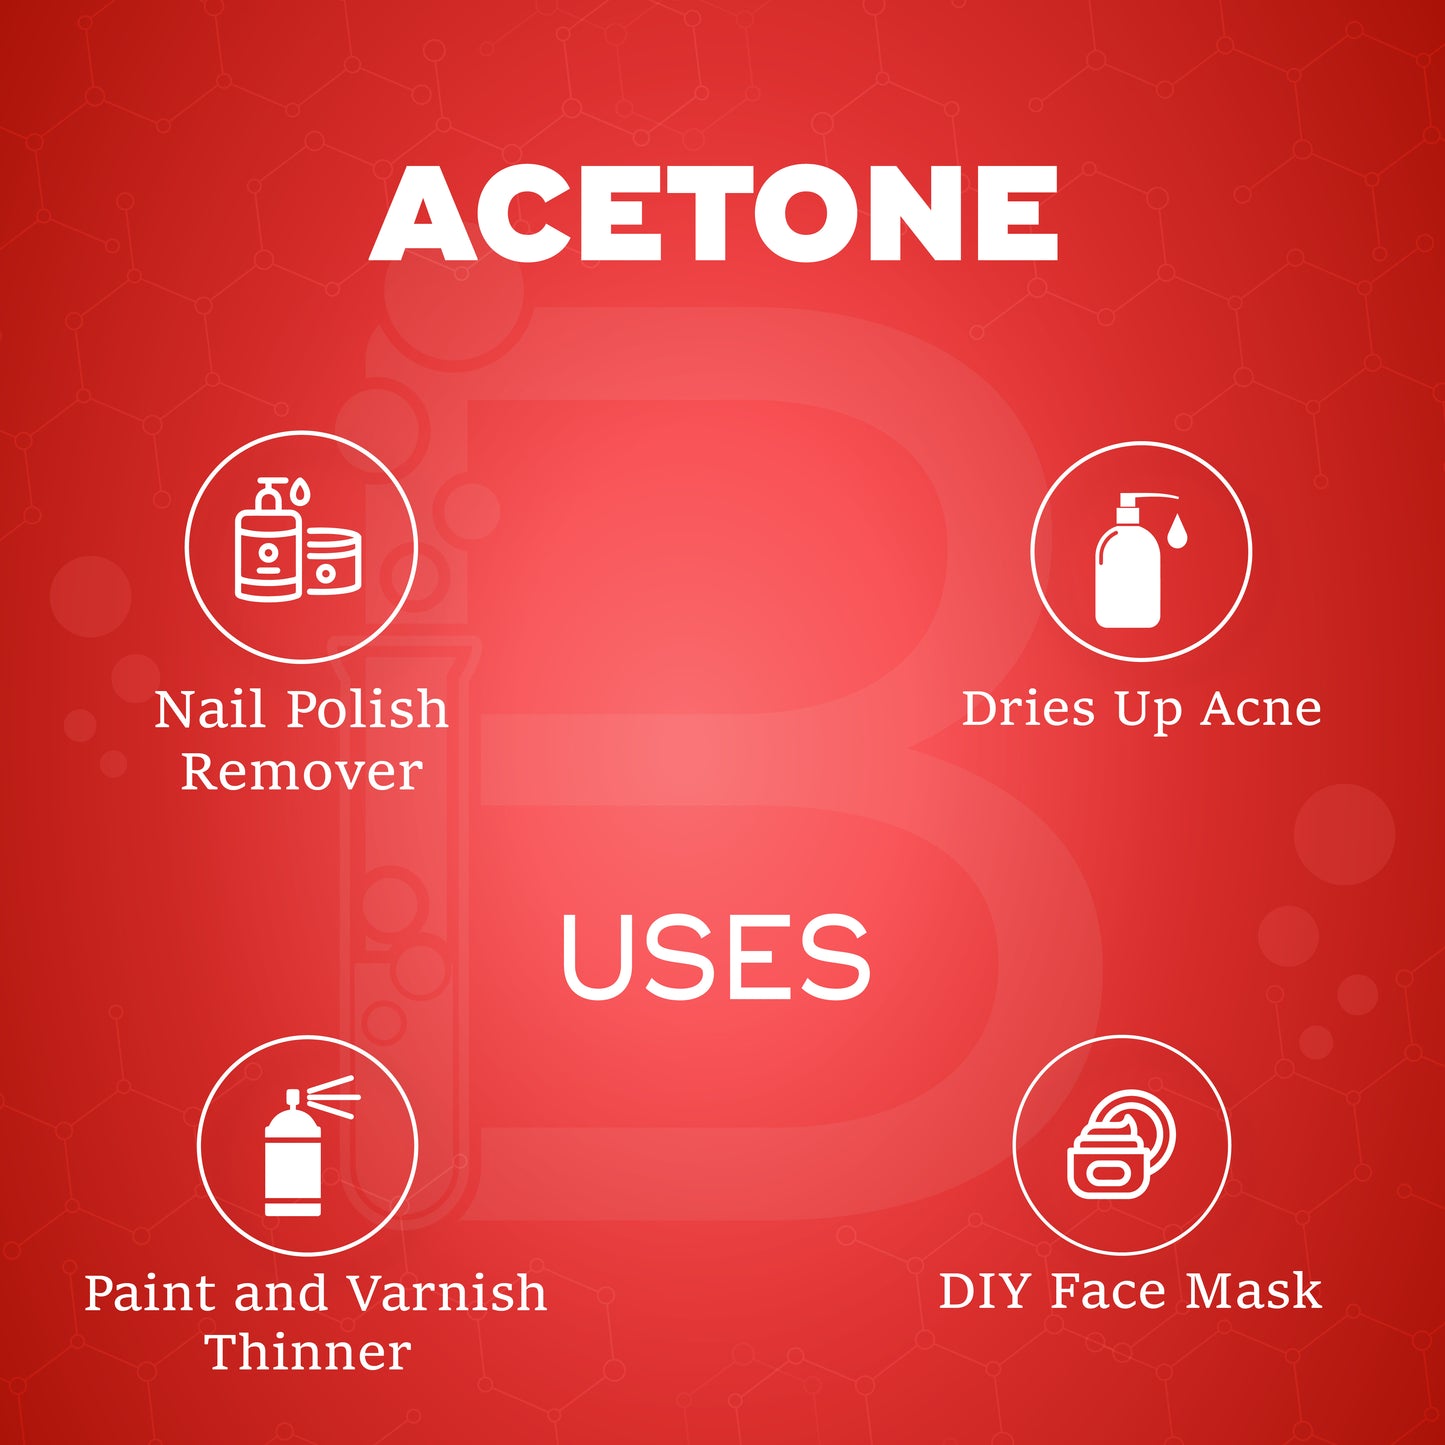 acetone, uses of acetone